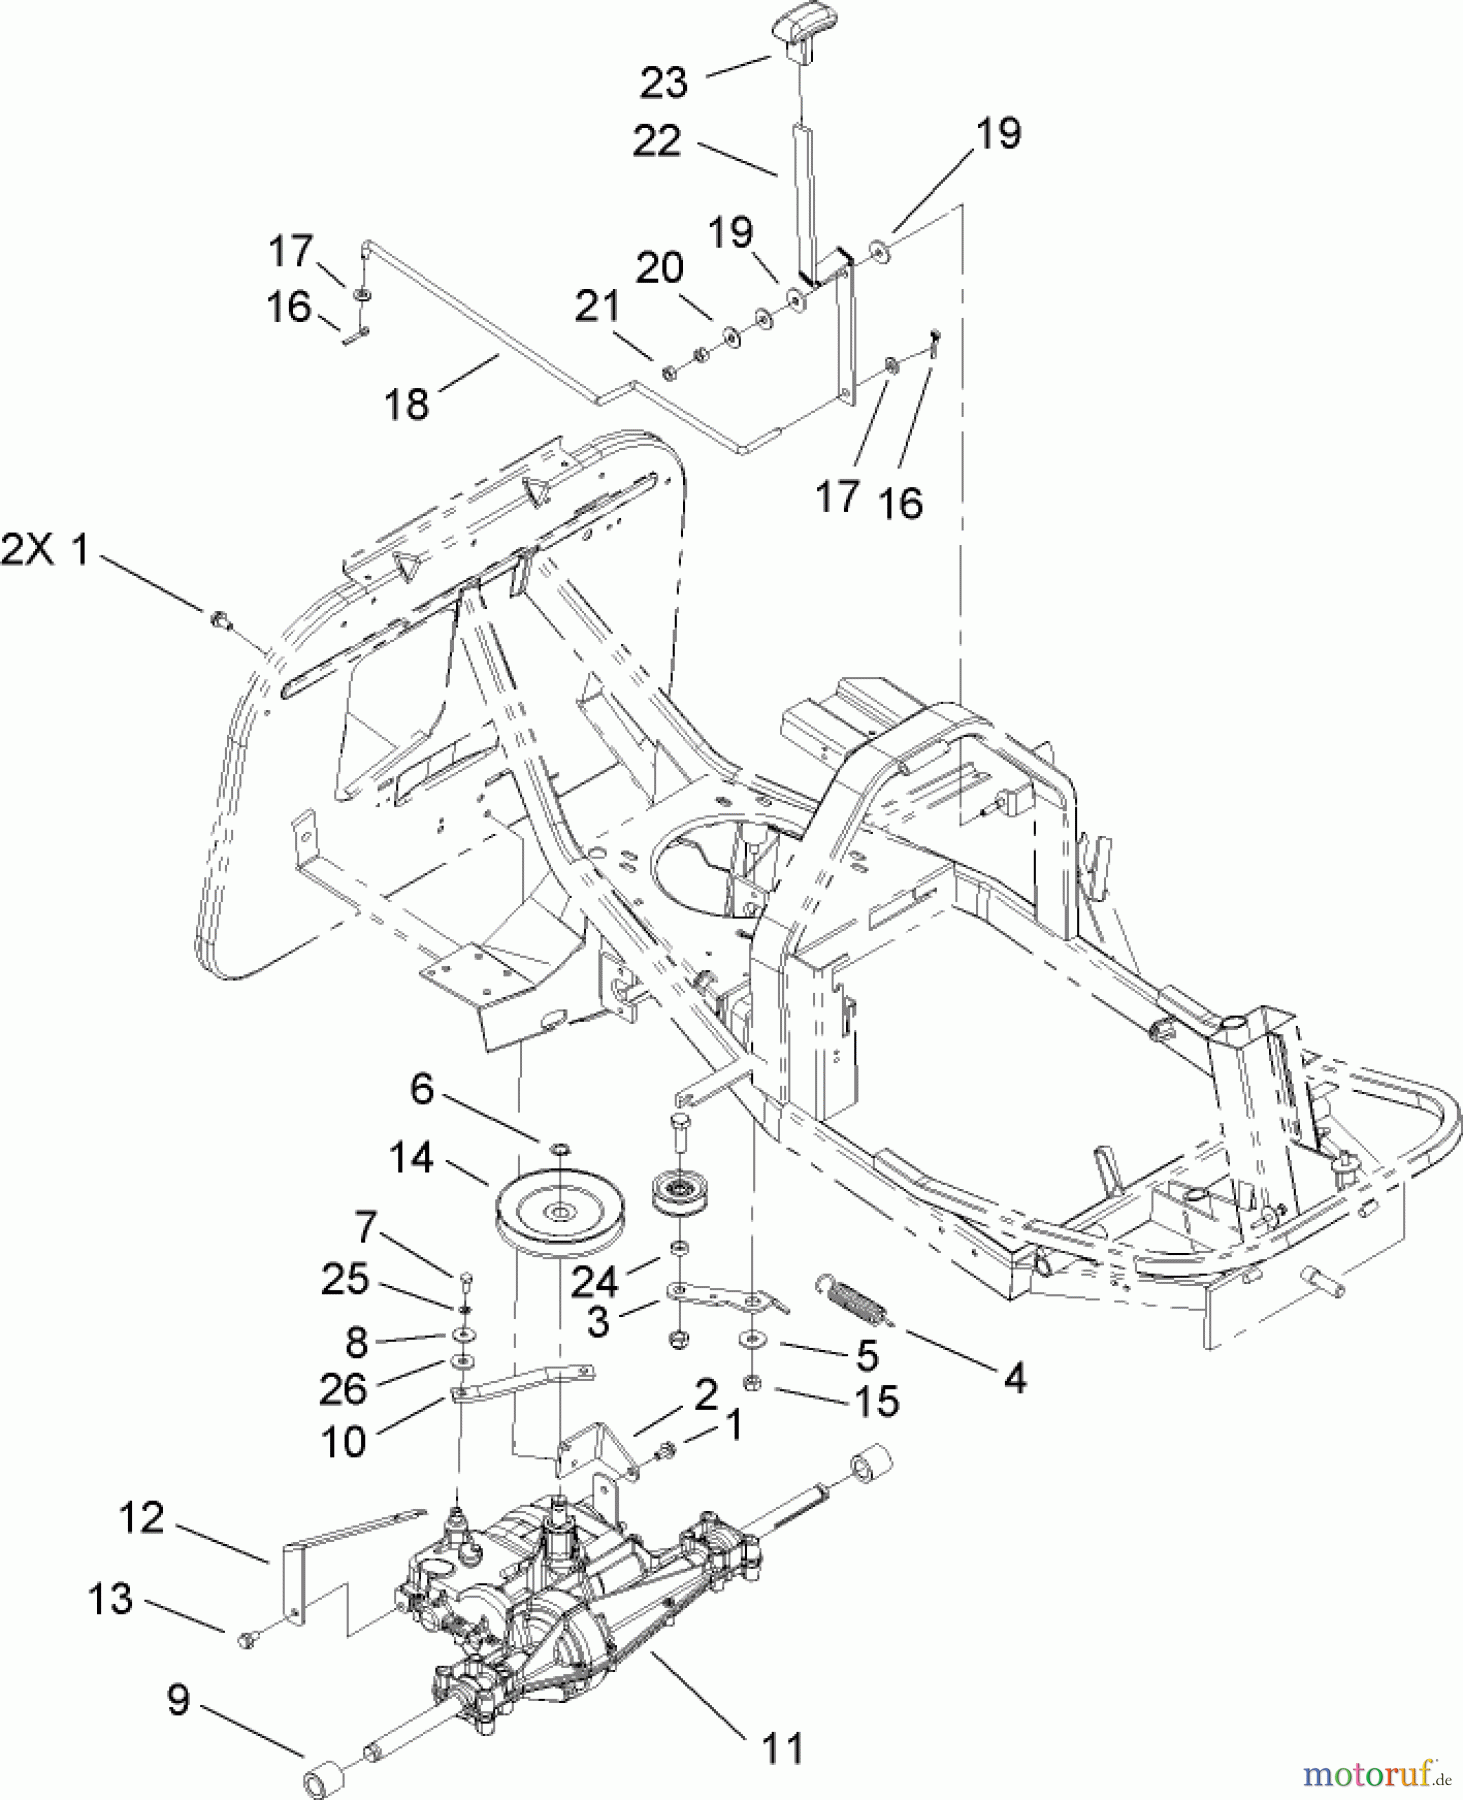  Toro Neu Mowers, Rear-Engine Rider 70185 (G132) - Toro G132 Rear-Engine Riding Mower, 2007 (270000001-270805705) GEAR TRANSMISSION AND LINKAGE ASSEMBLY